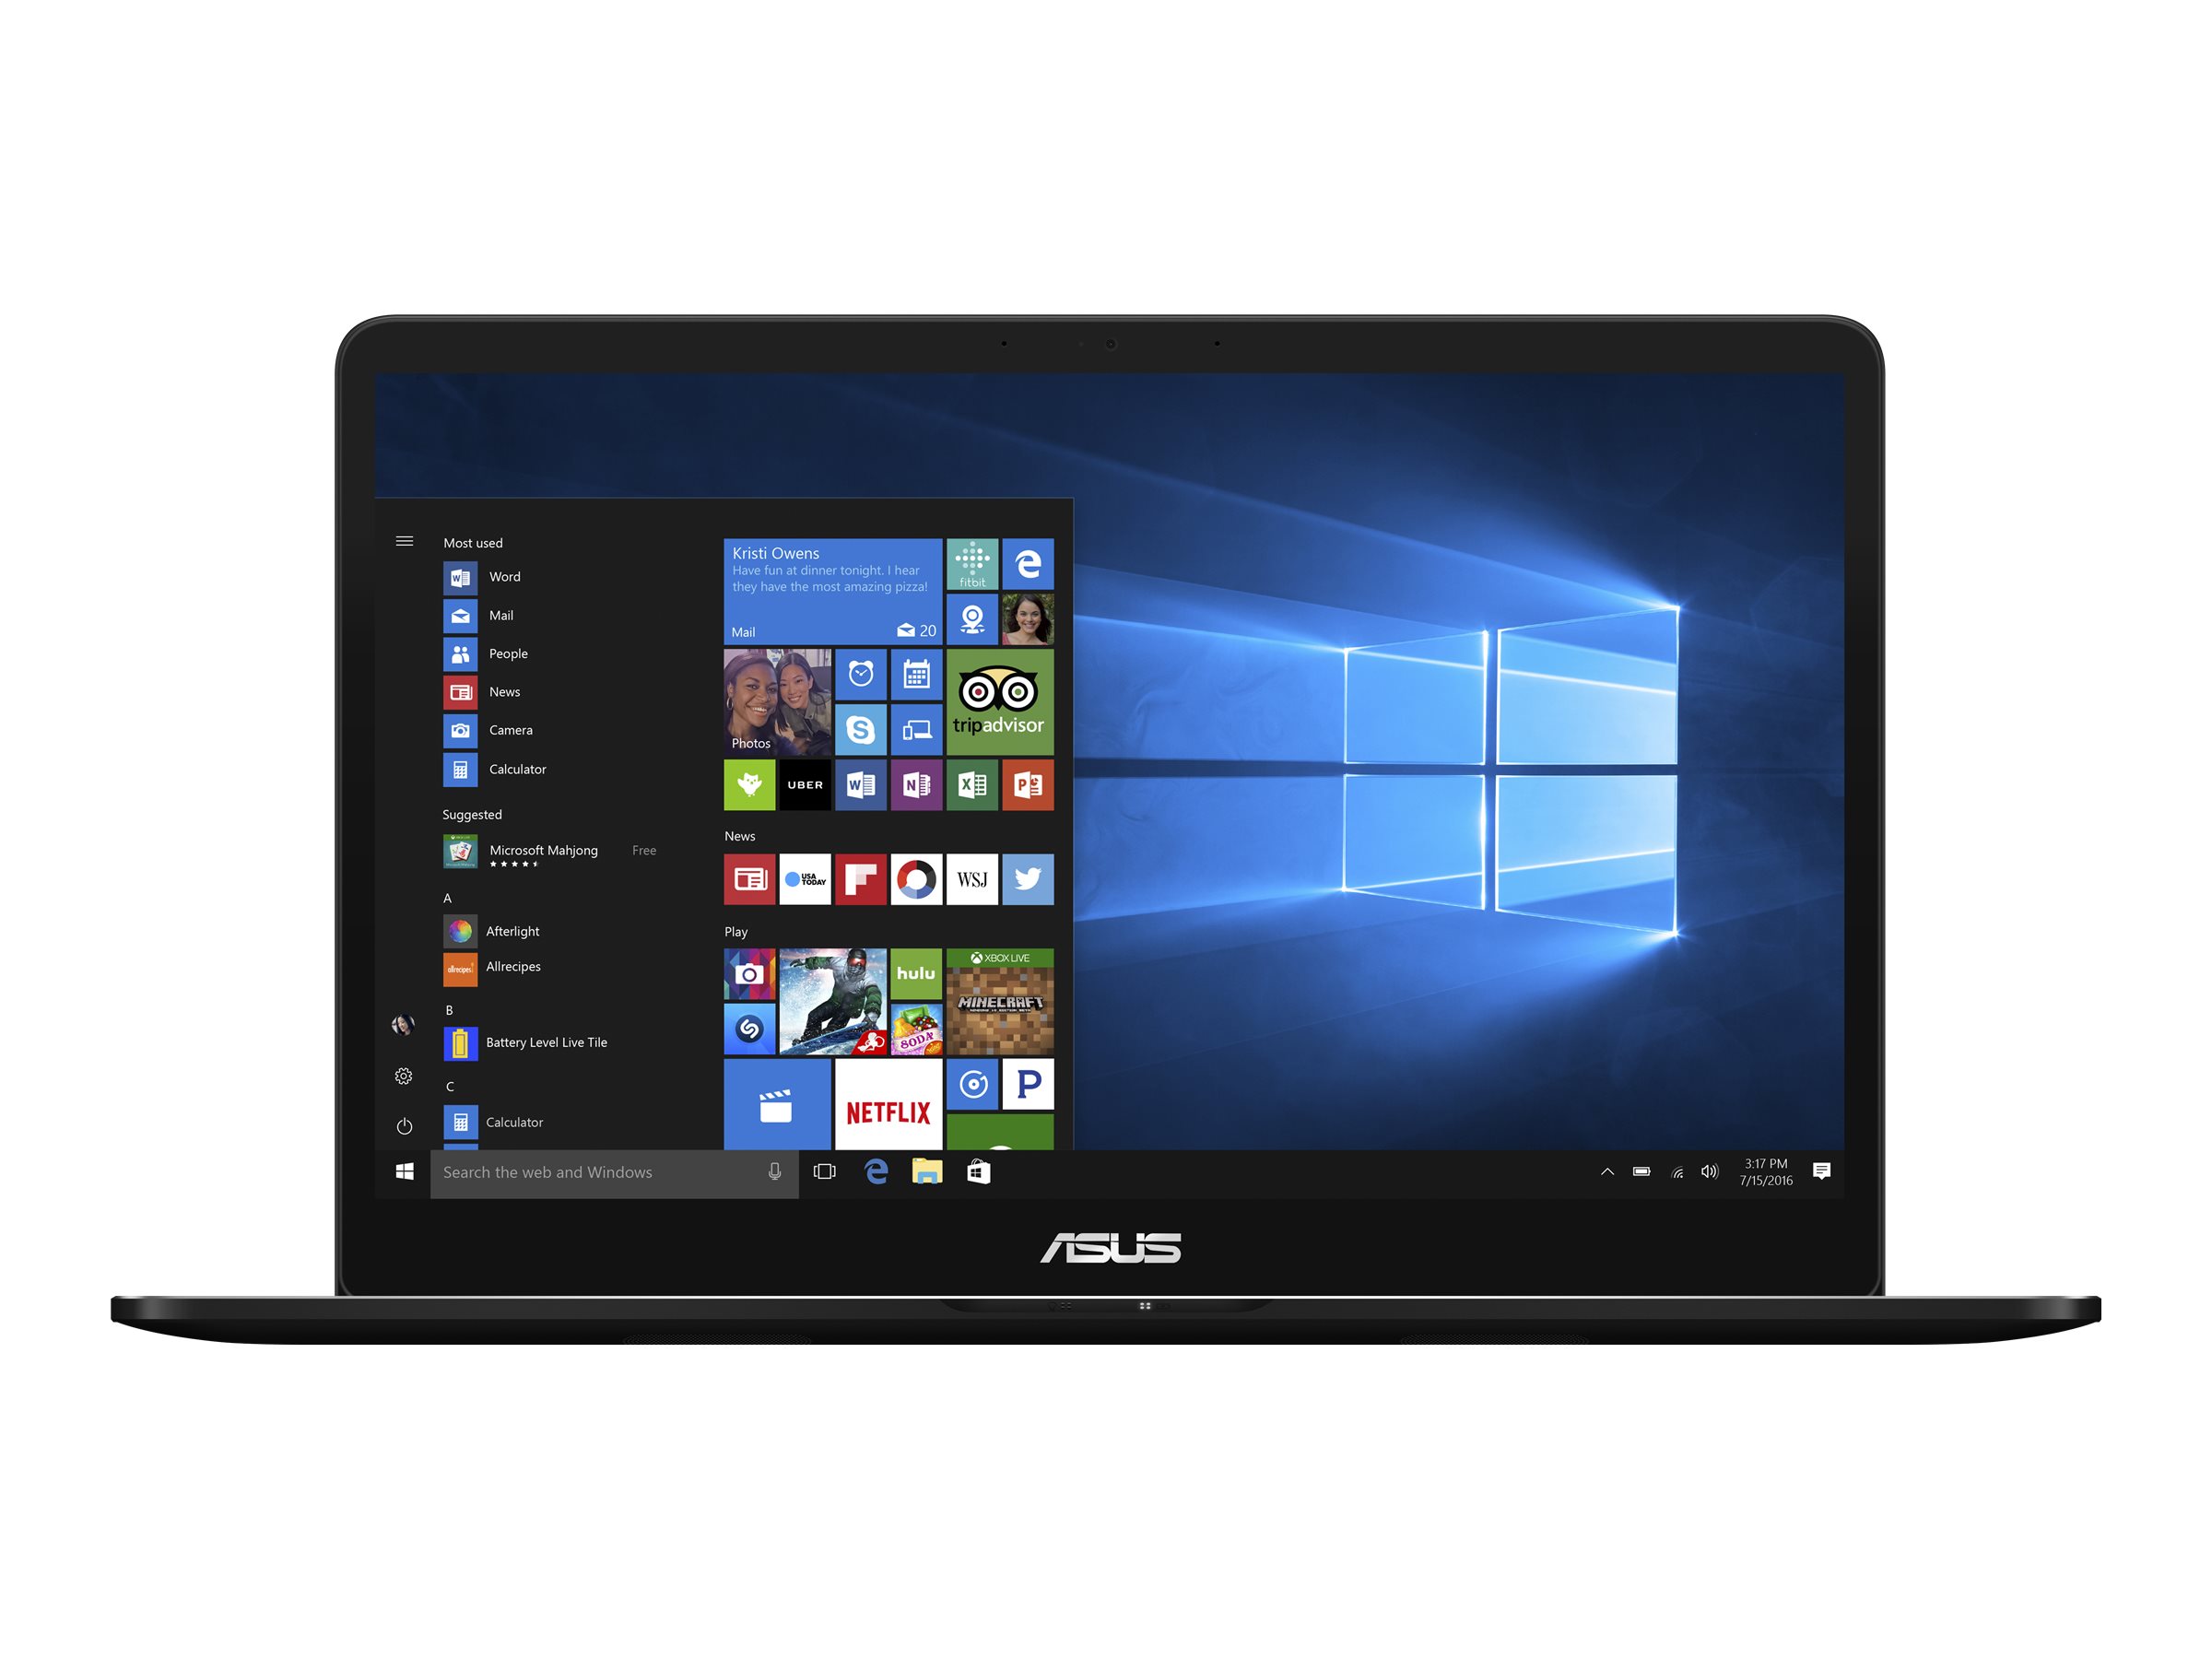 ASUS ZenBook Pro UX550VD (BN011T)